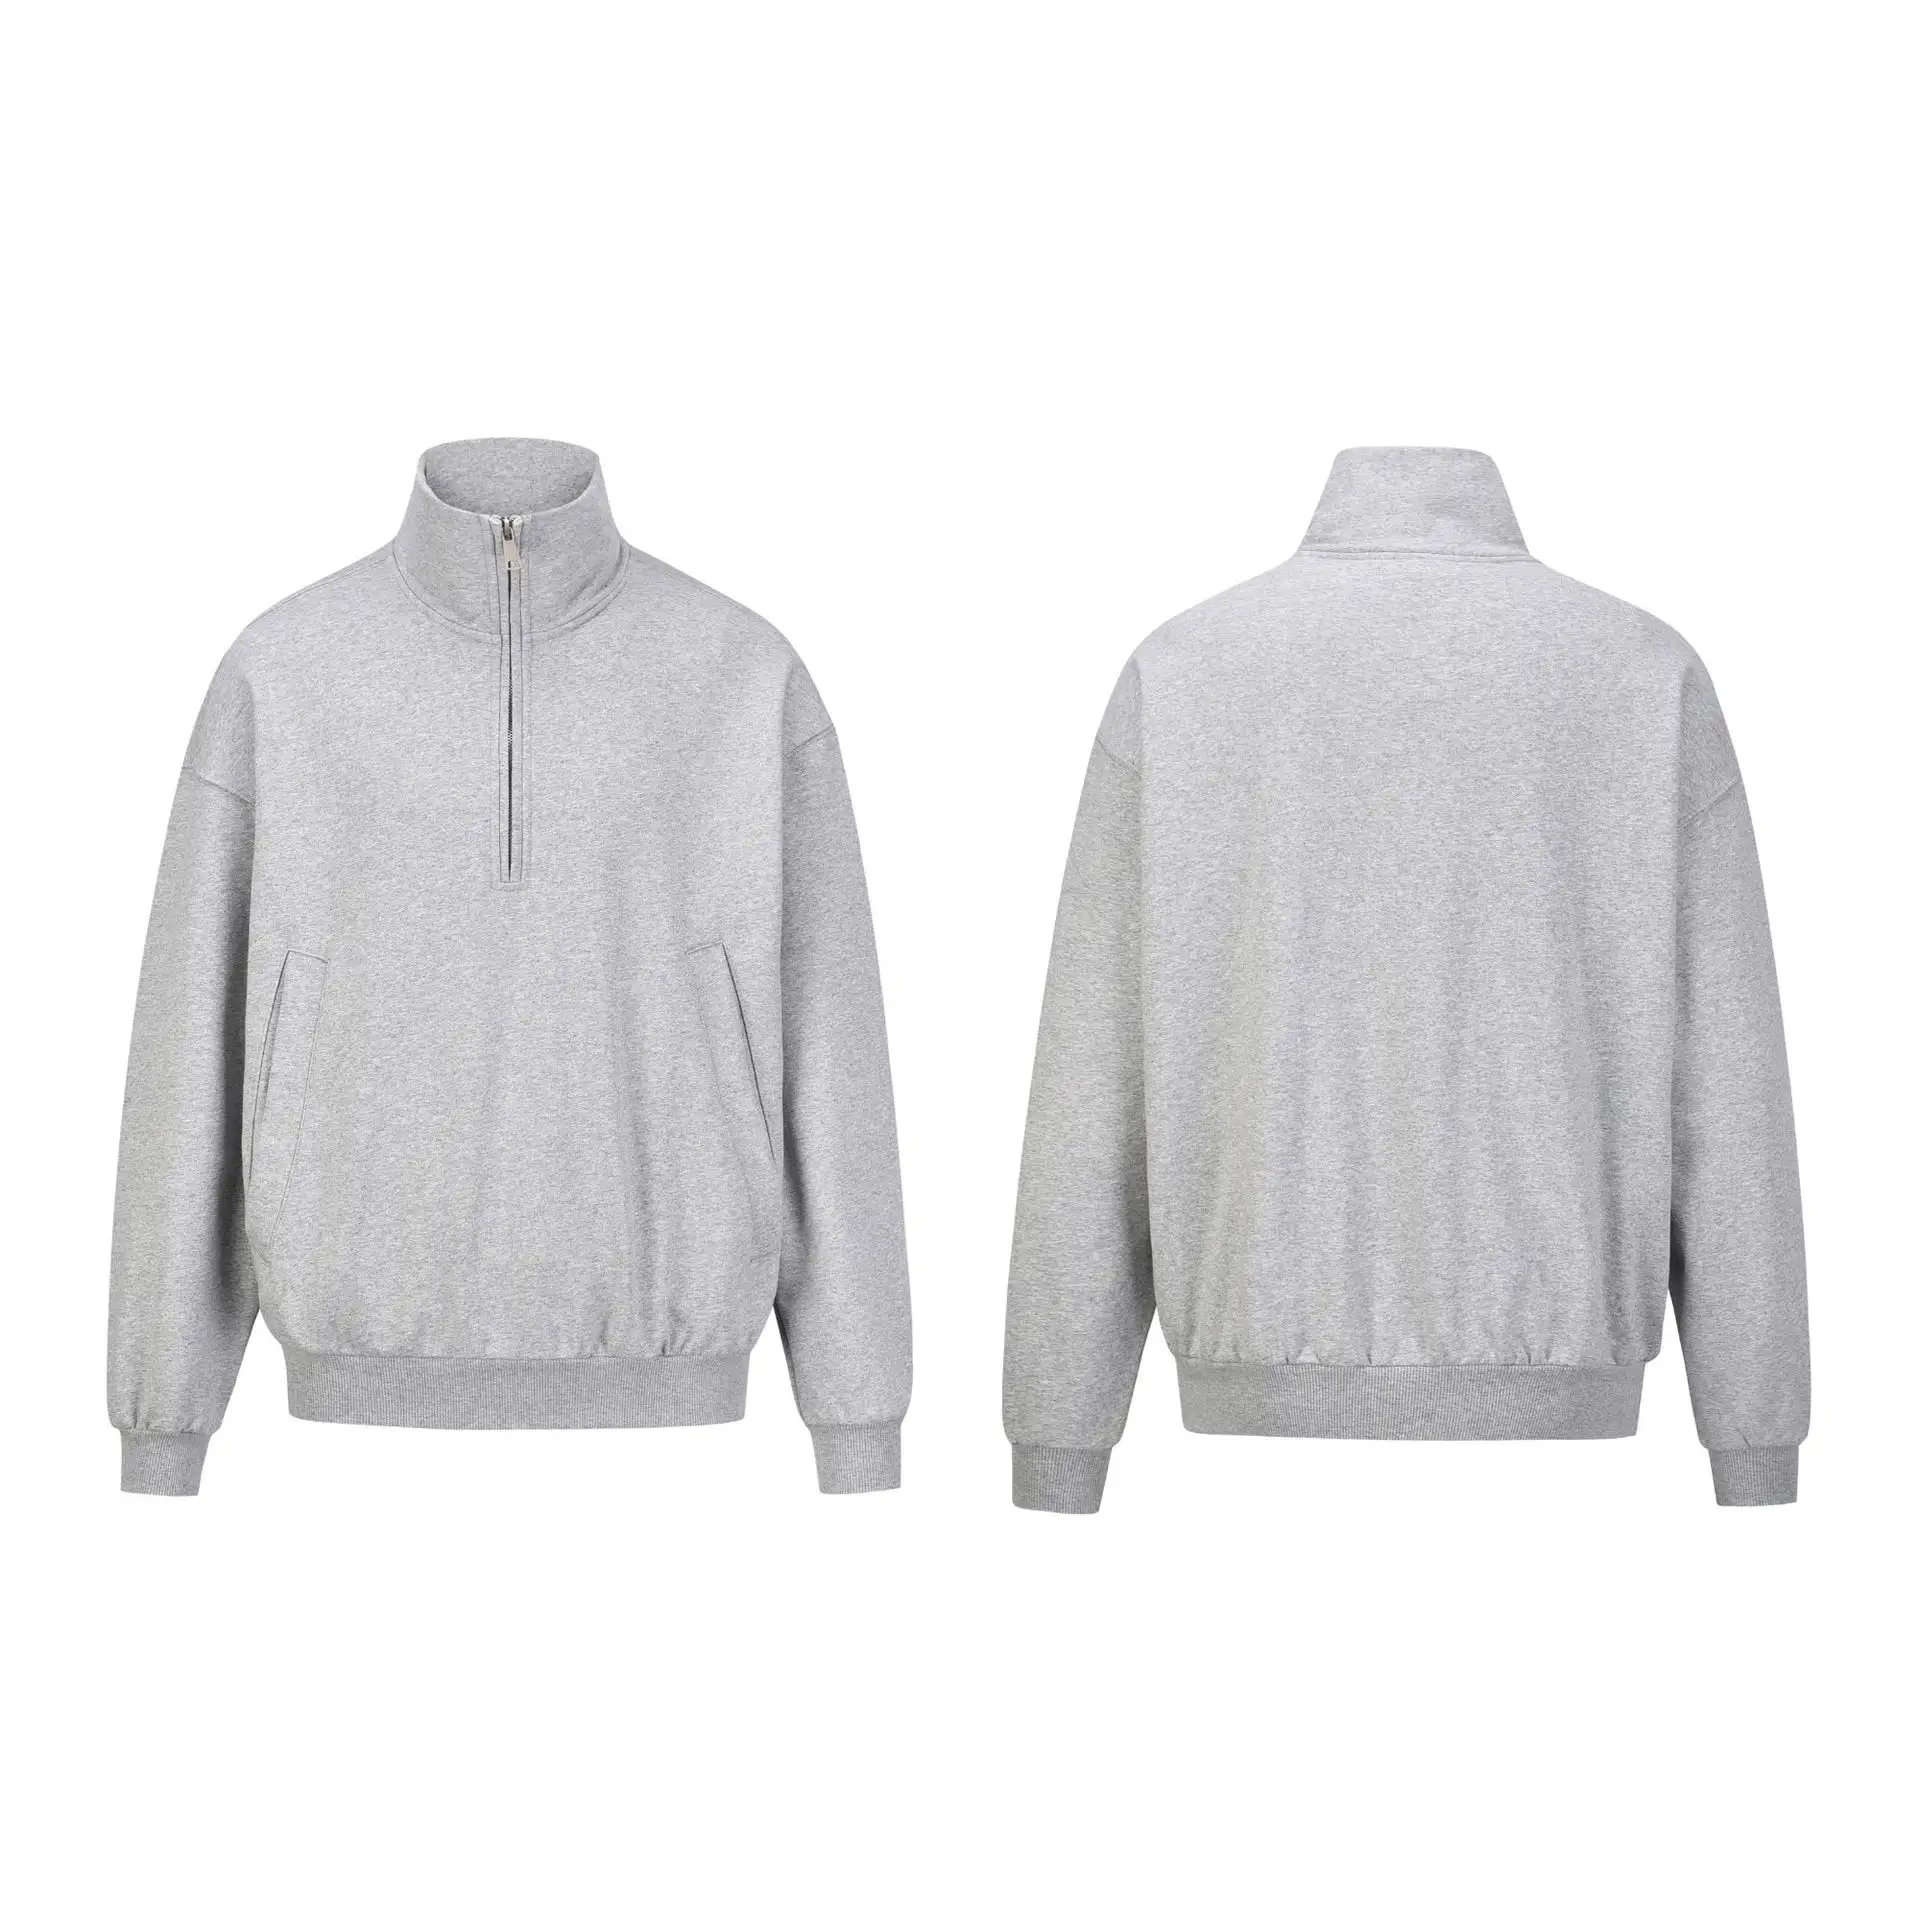 High Street 350gsm cotton Terry zipped sweatshirt blank solid sweatshirt with stand collar quarter zip neck sweatshirt